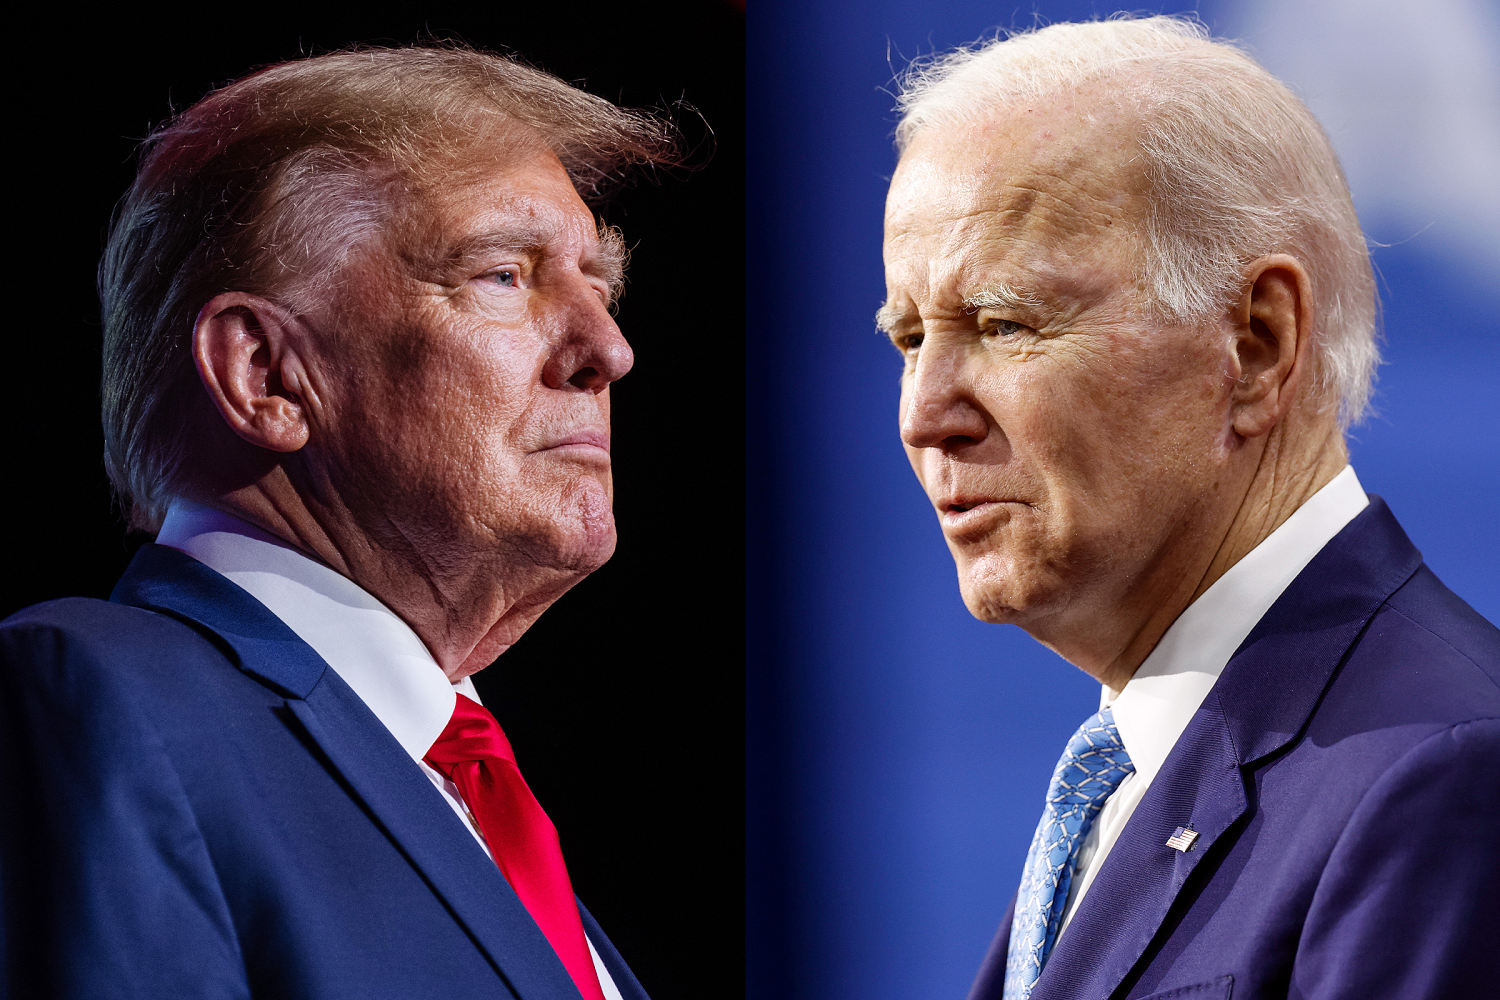 From 'WORST debater' to 'worthy debater': Trump changes his tune on Biden's skills